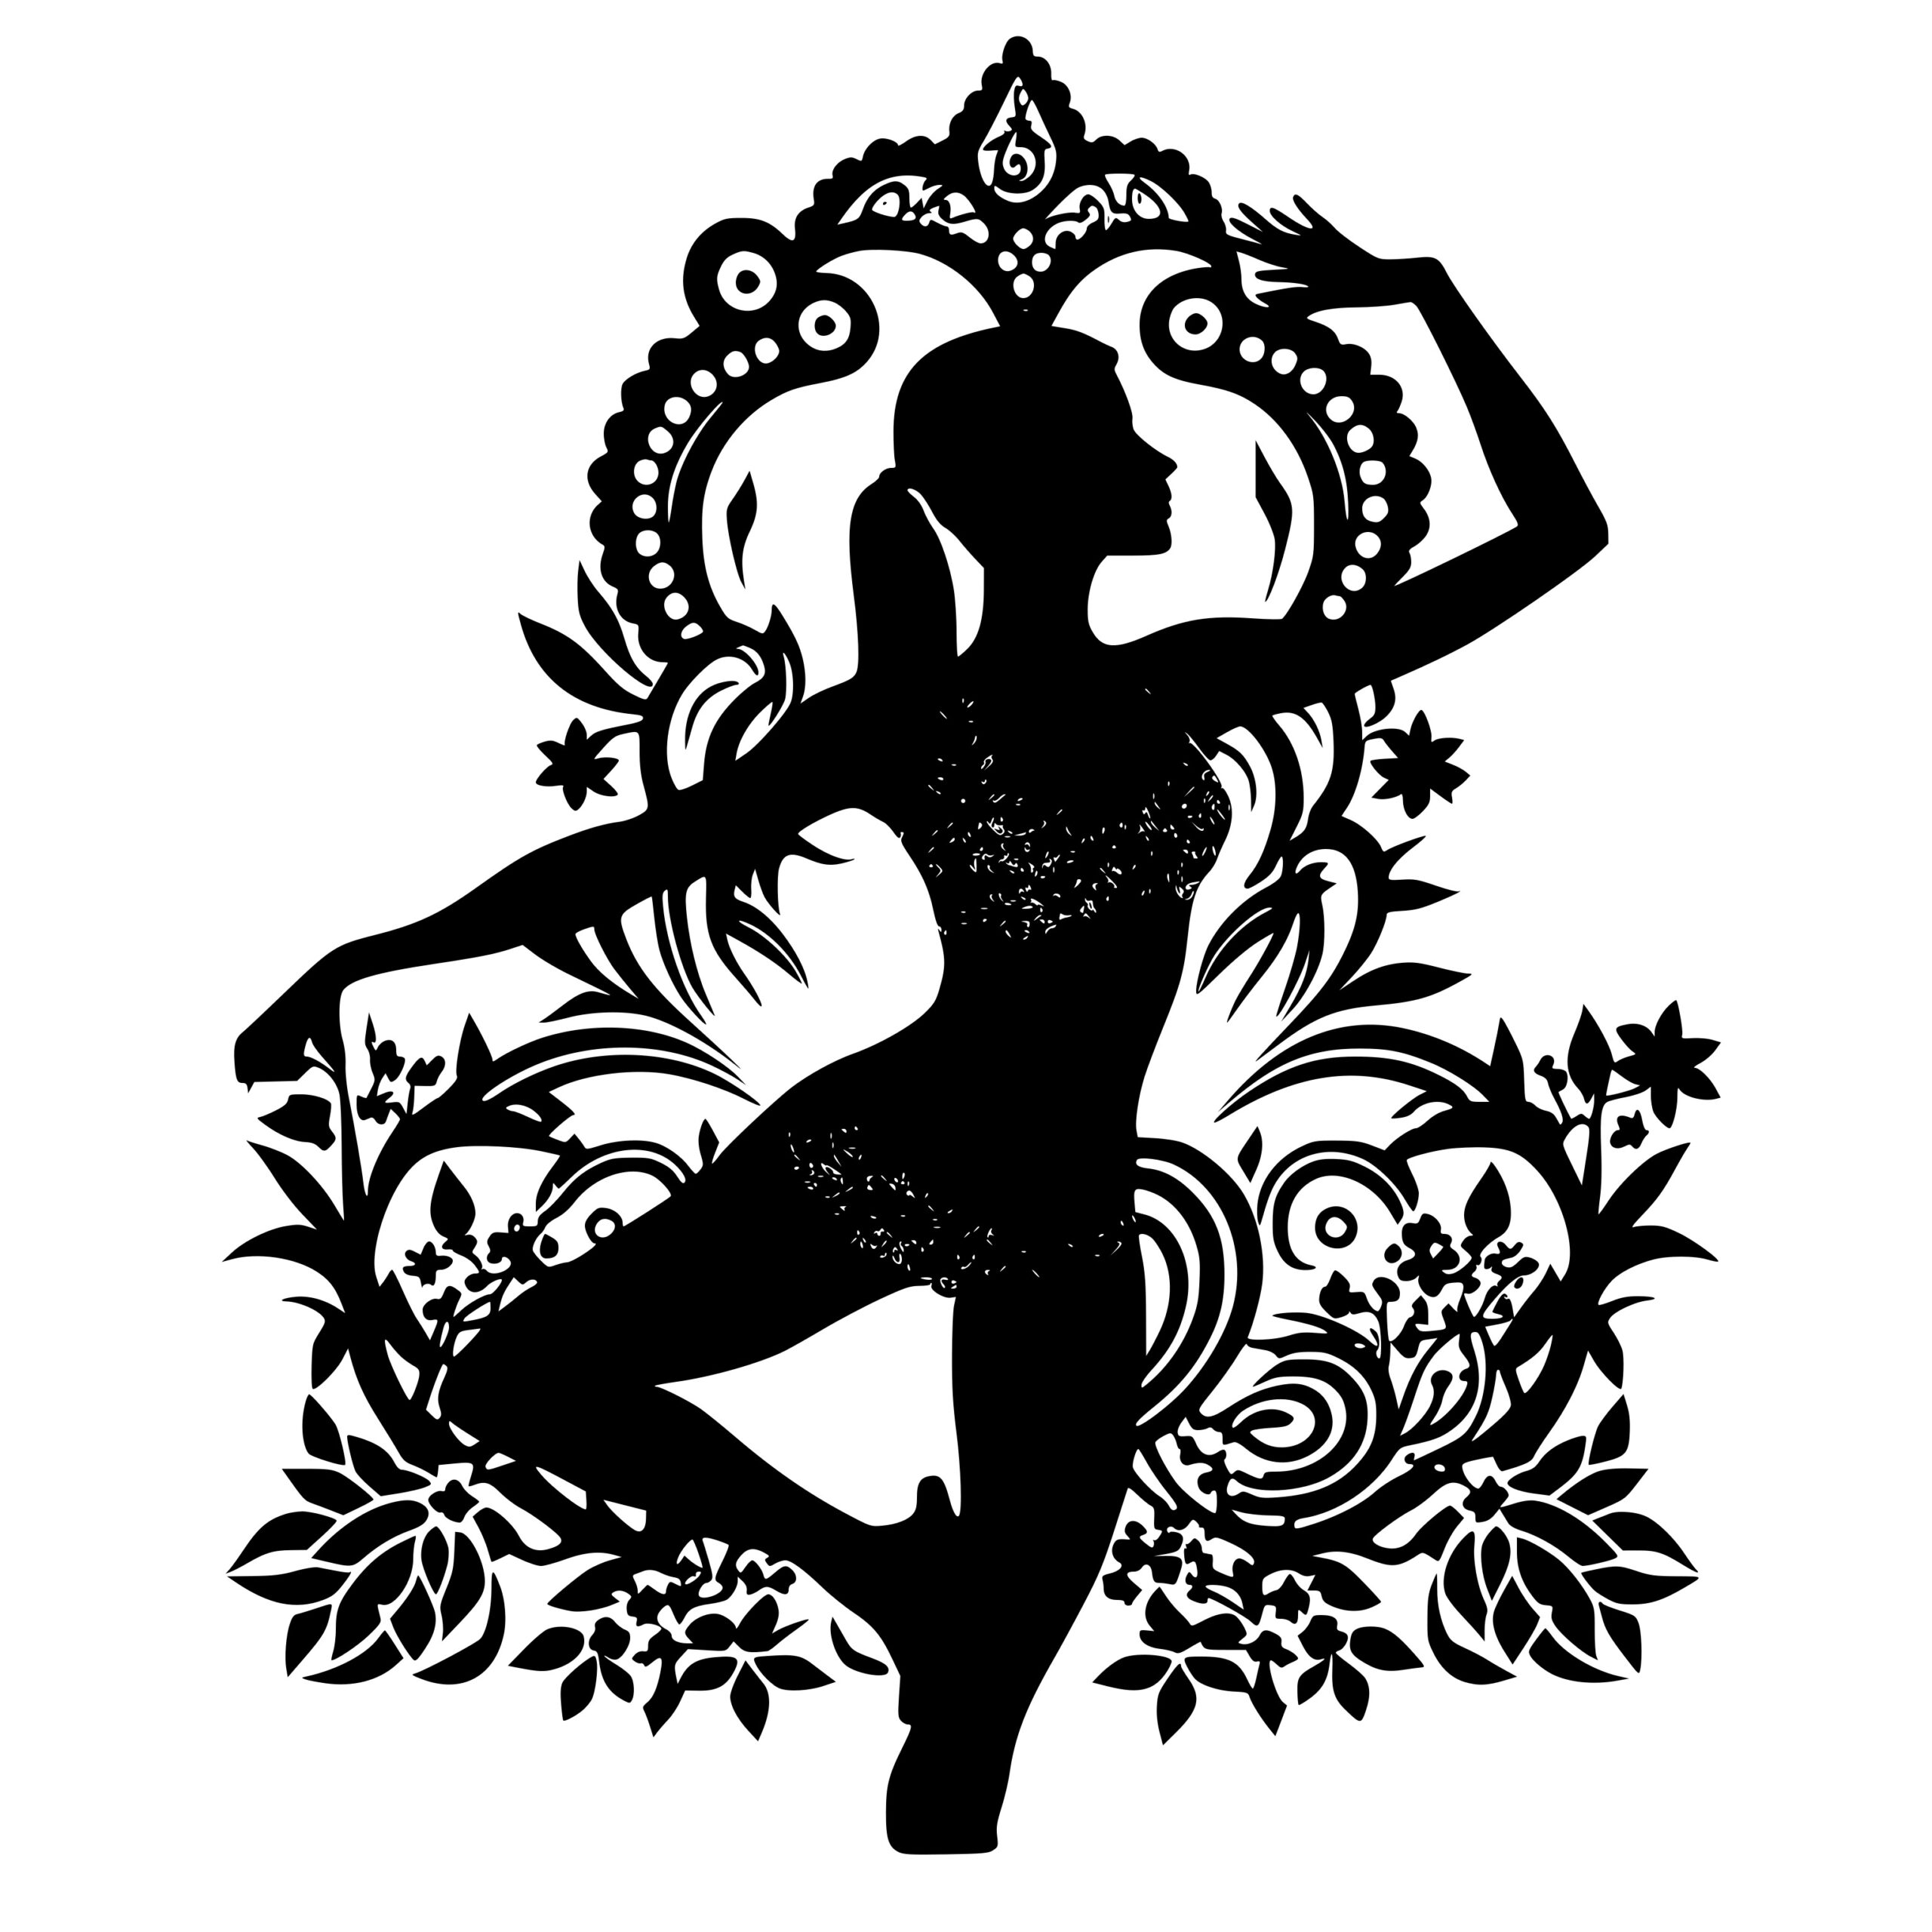 Yoga SVG File for Instant Download Image | Cricut, Silhouette, Laser